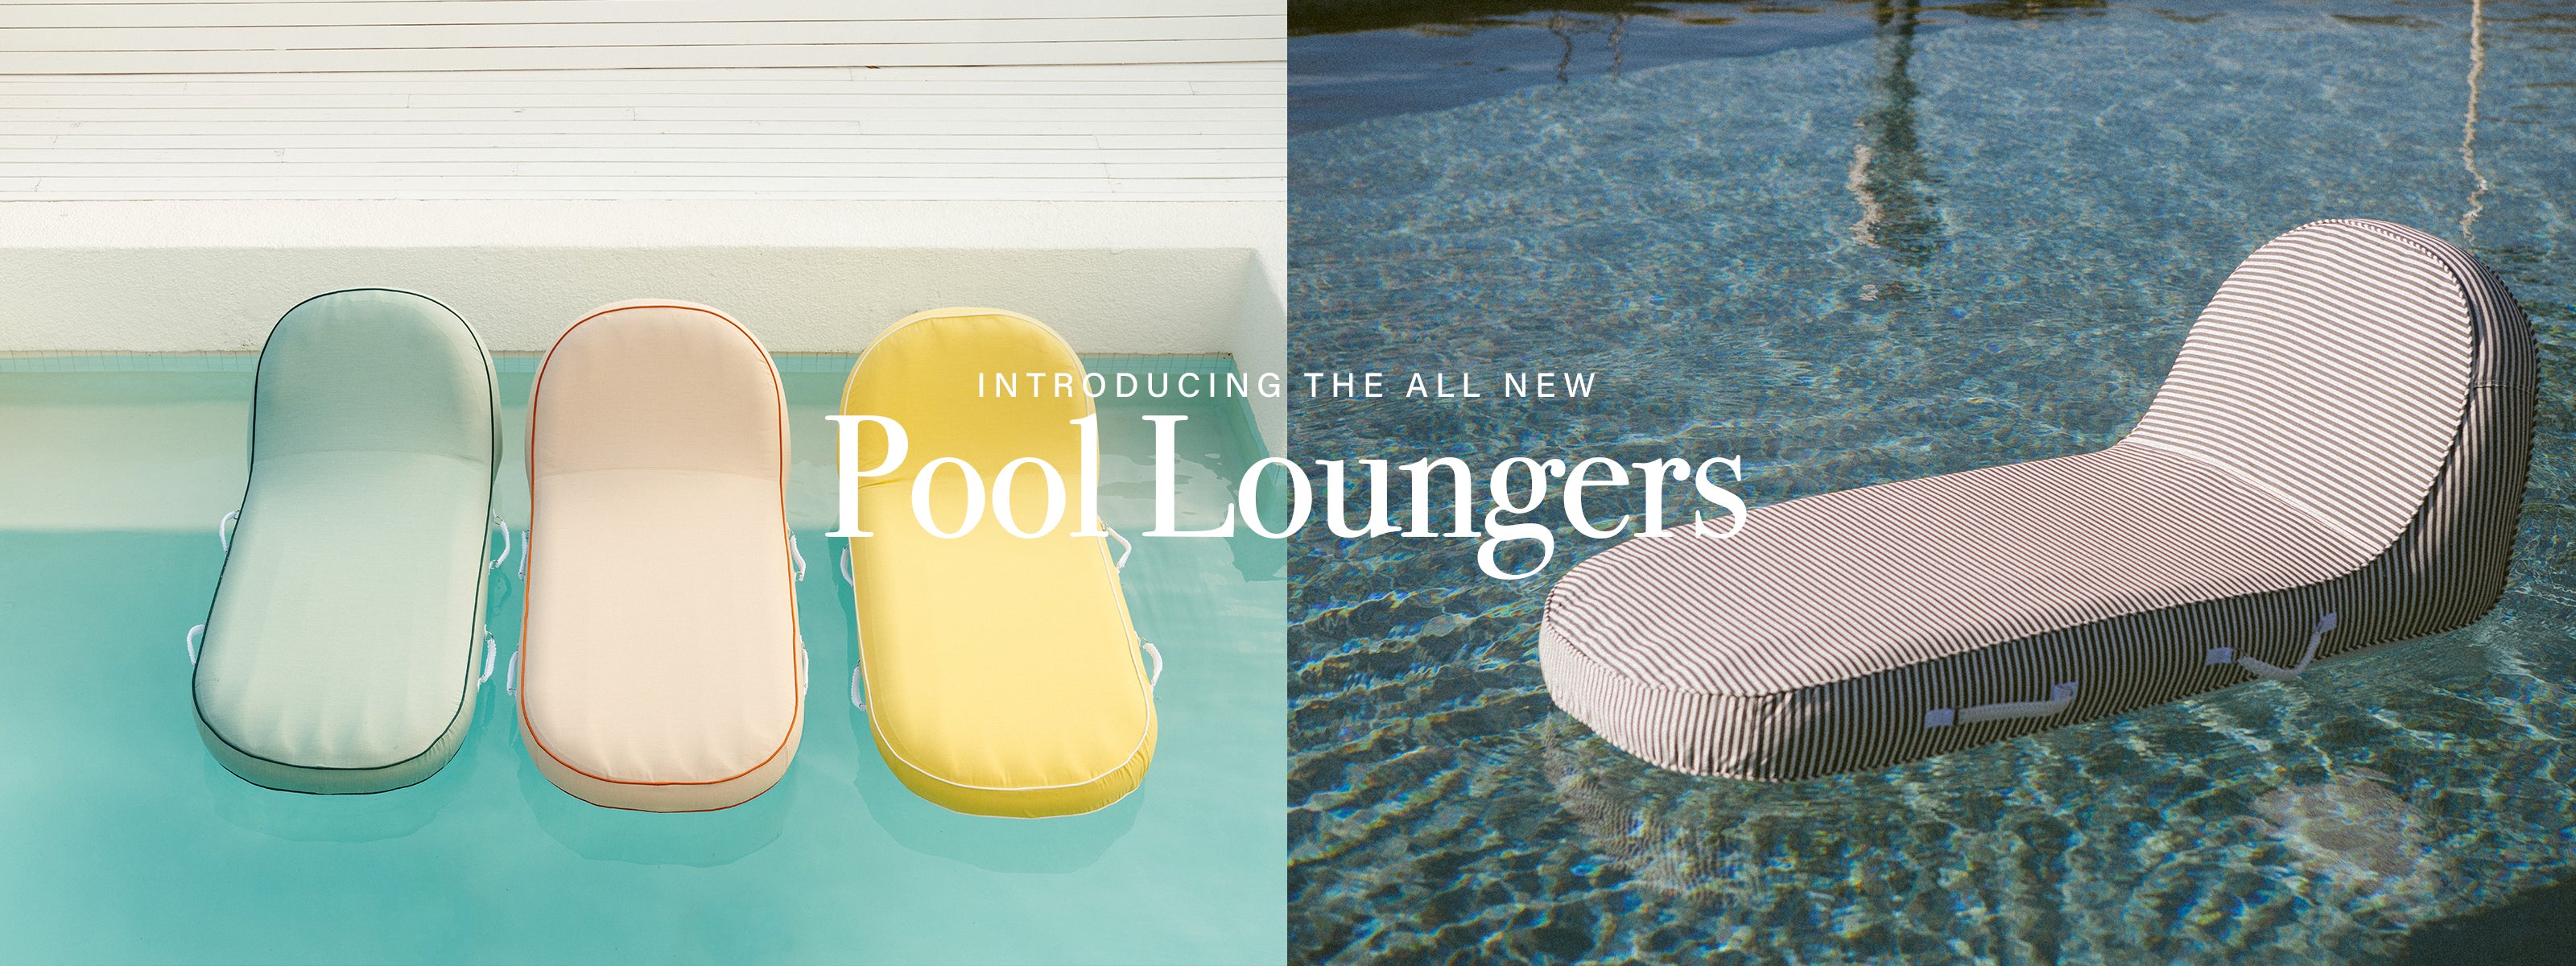 Pool loungers